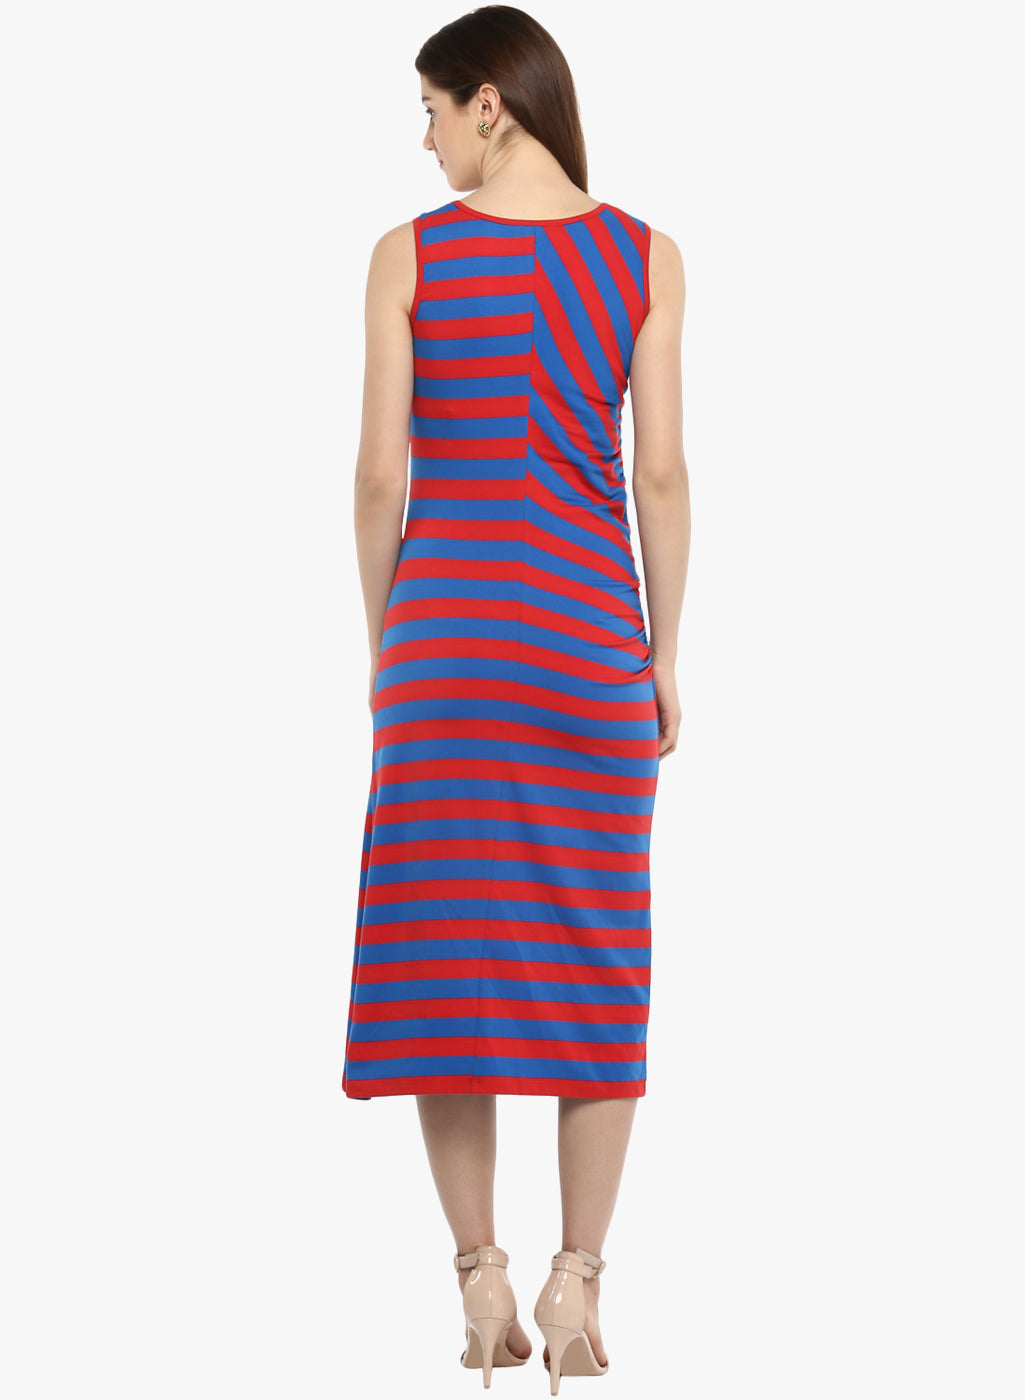 PORSORTE Women's Red and Blue Striped Dress - www.porsorte.in